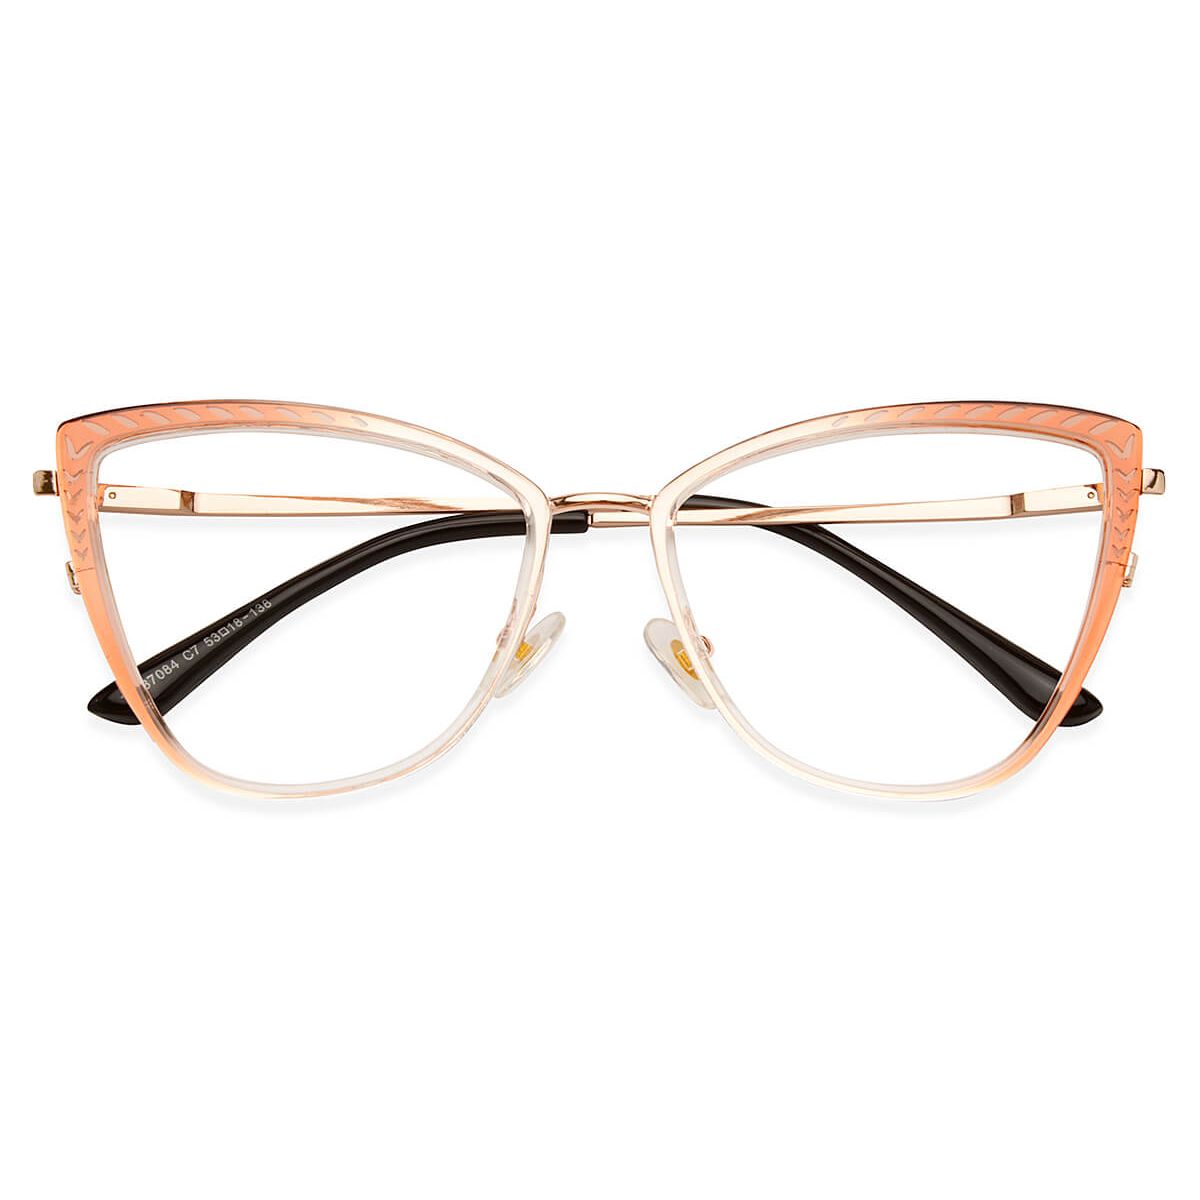 87084 Cat-eye Orange Eyeglasses Frames | Leoptique